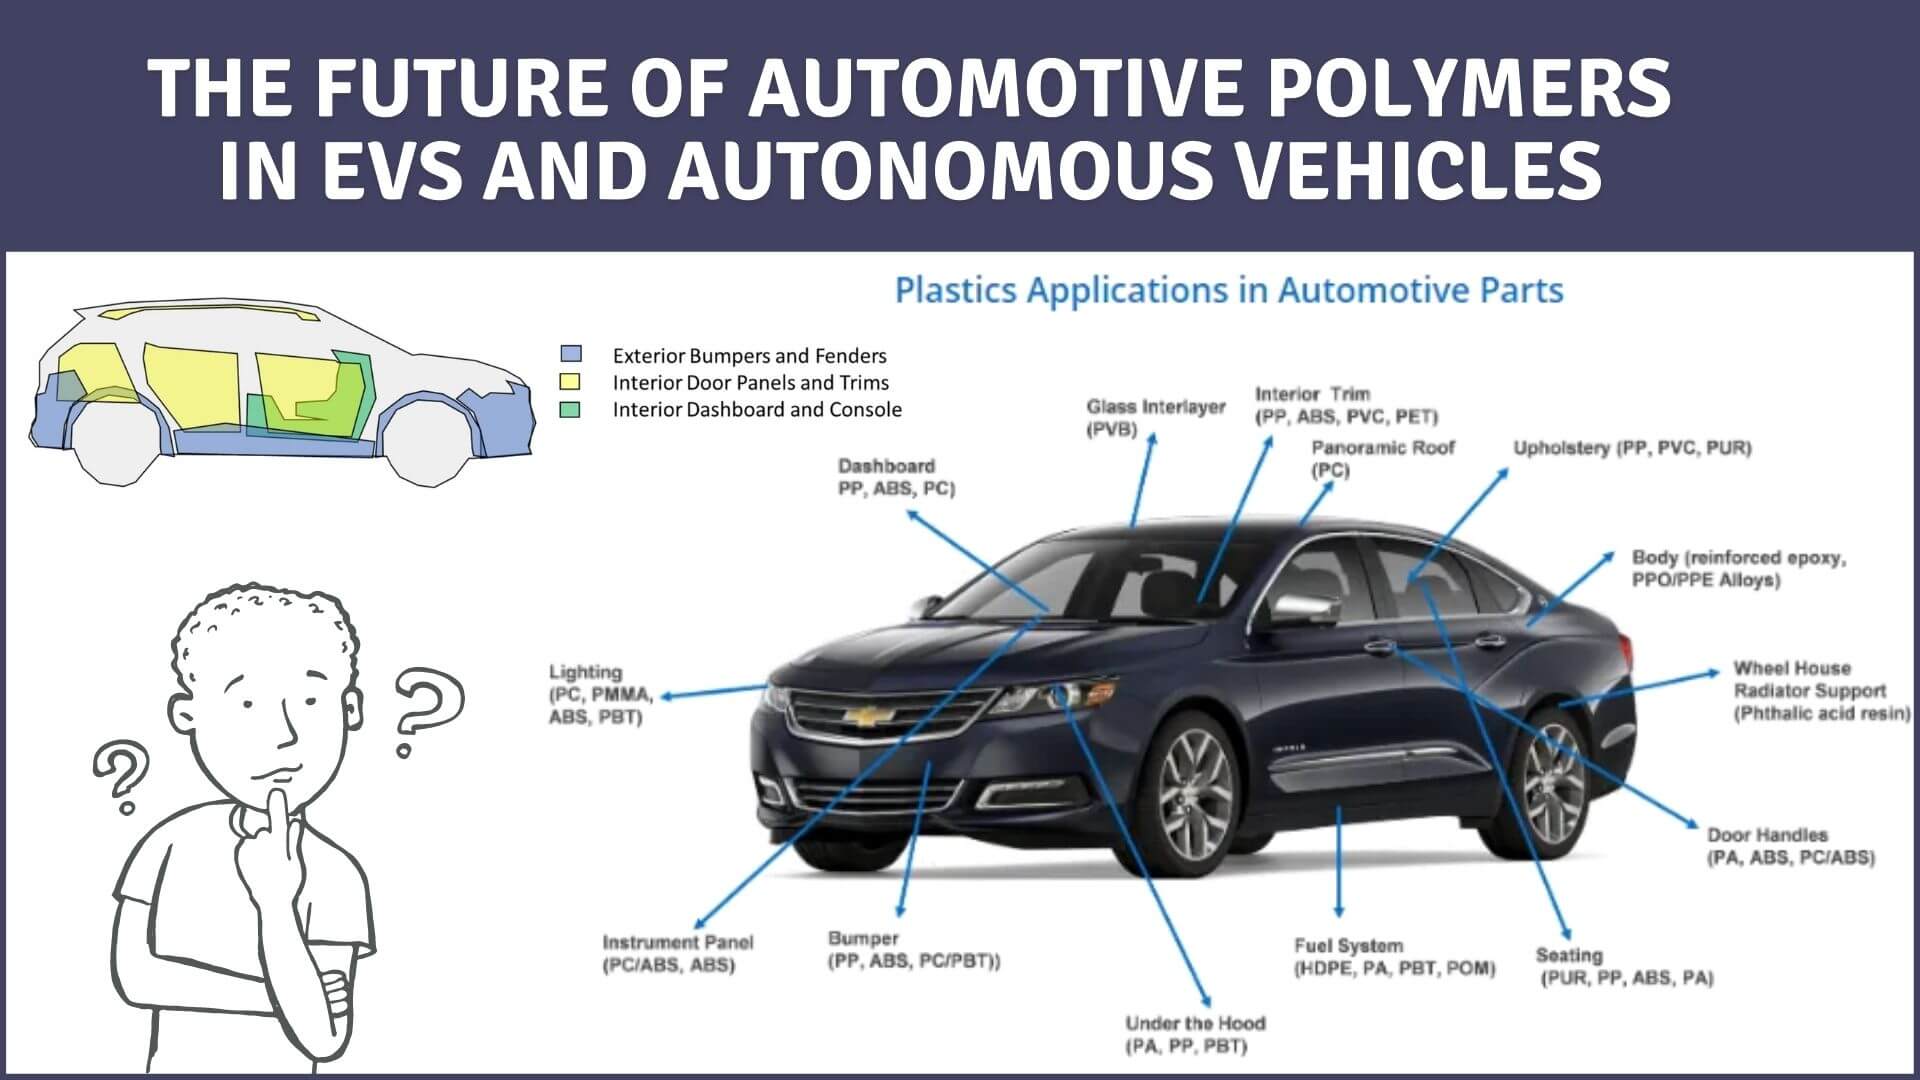 https://e-vehicleinfo.com/future-of-automotive-polymers-in-evs-and-autonomous-vehicles/